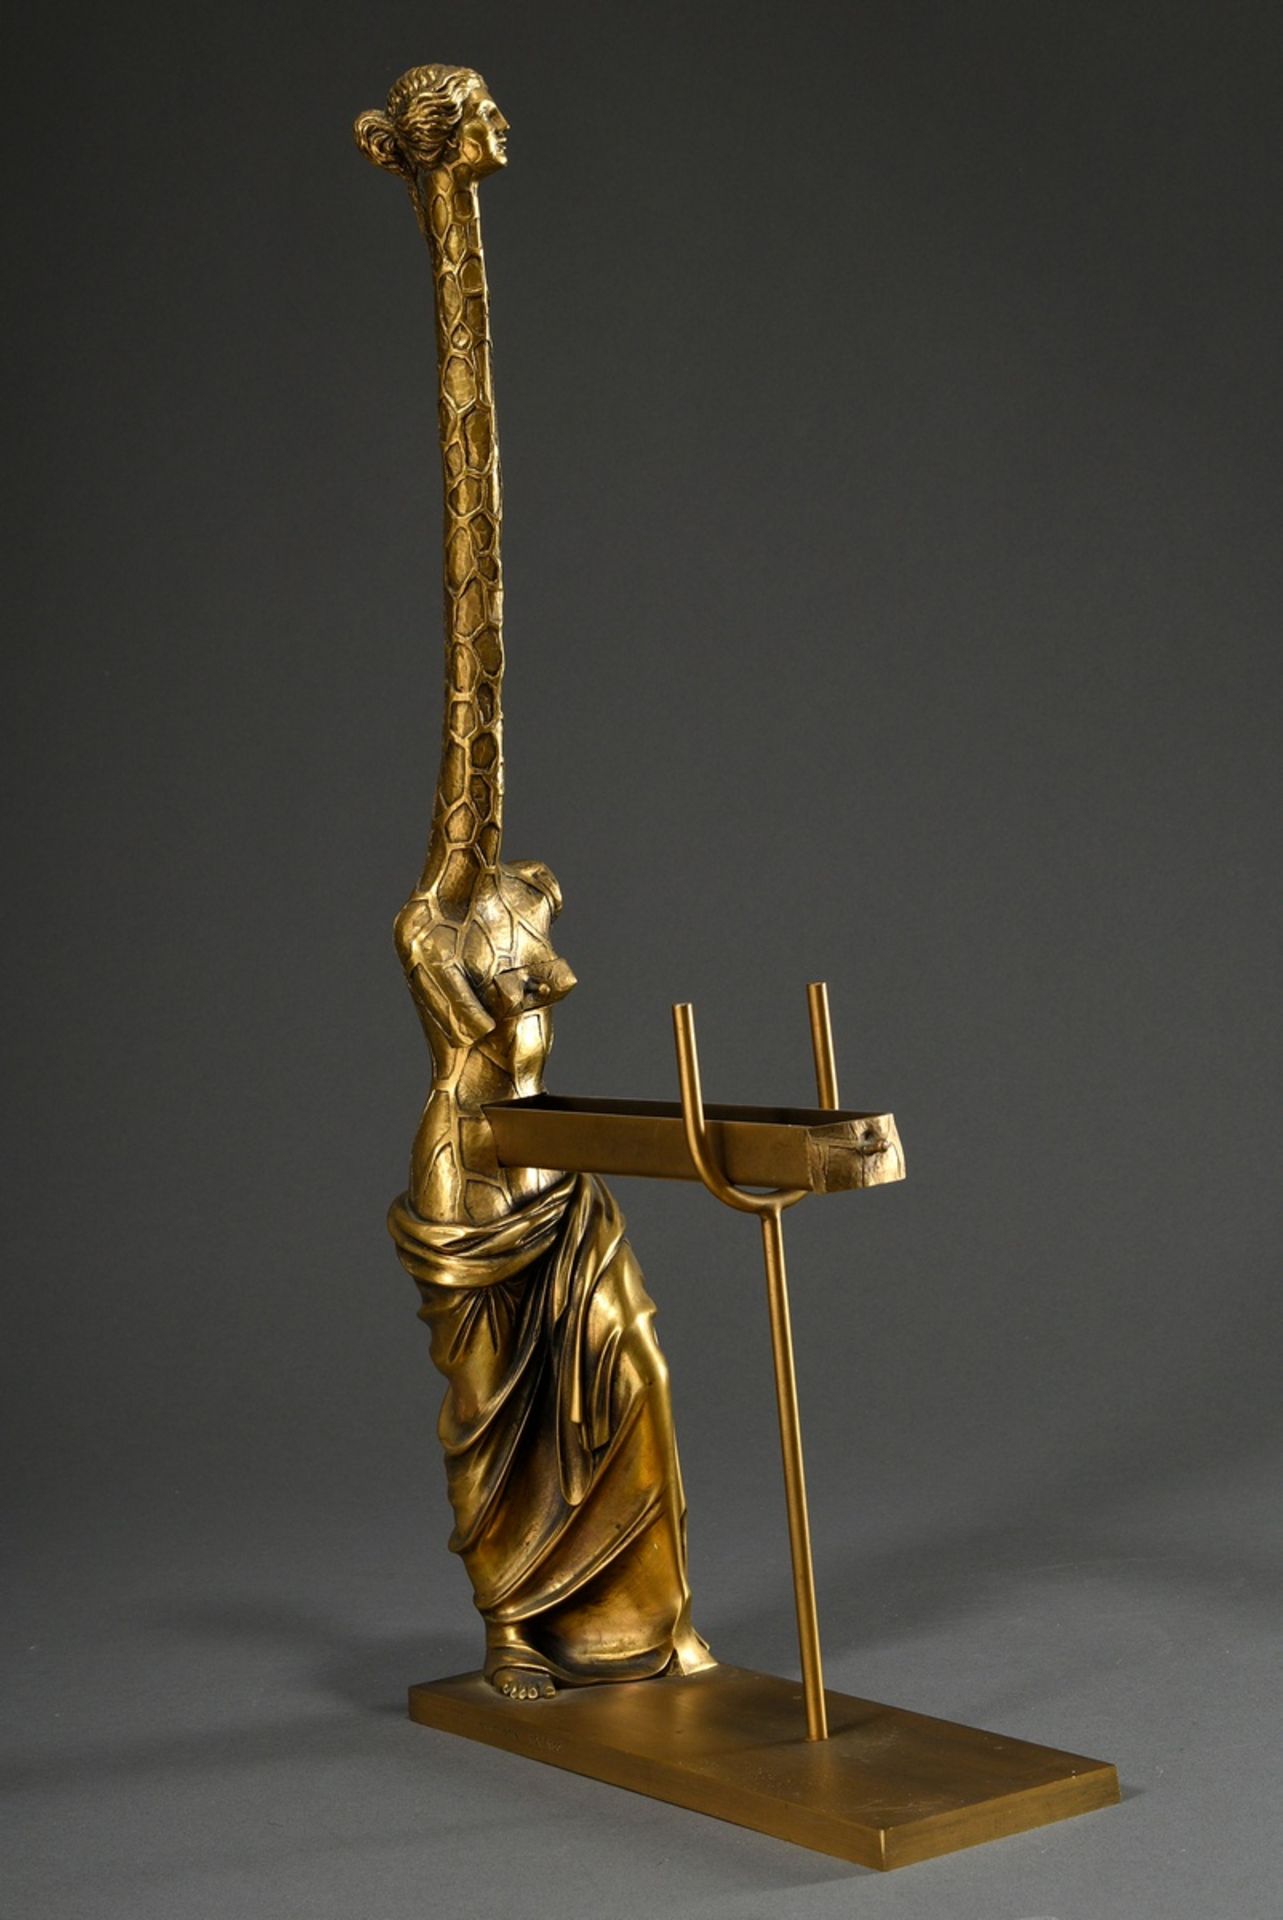 Dalí, Salvador (1904-1989) "Venus à la giraffe", bronze, golden patinated, with movable elements, 1